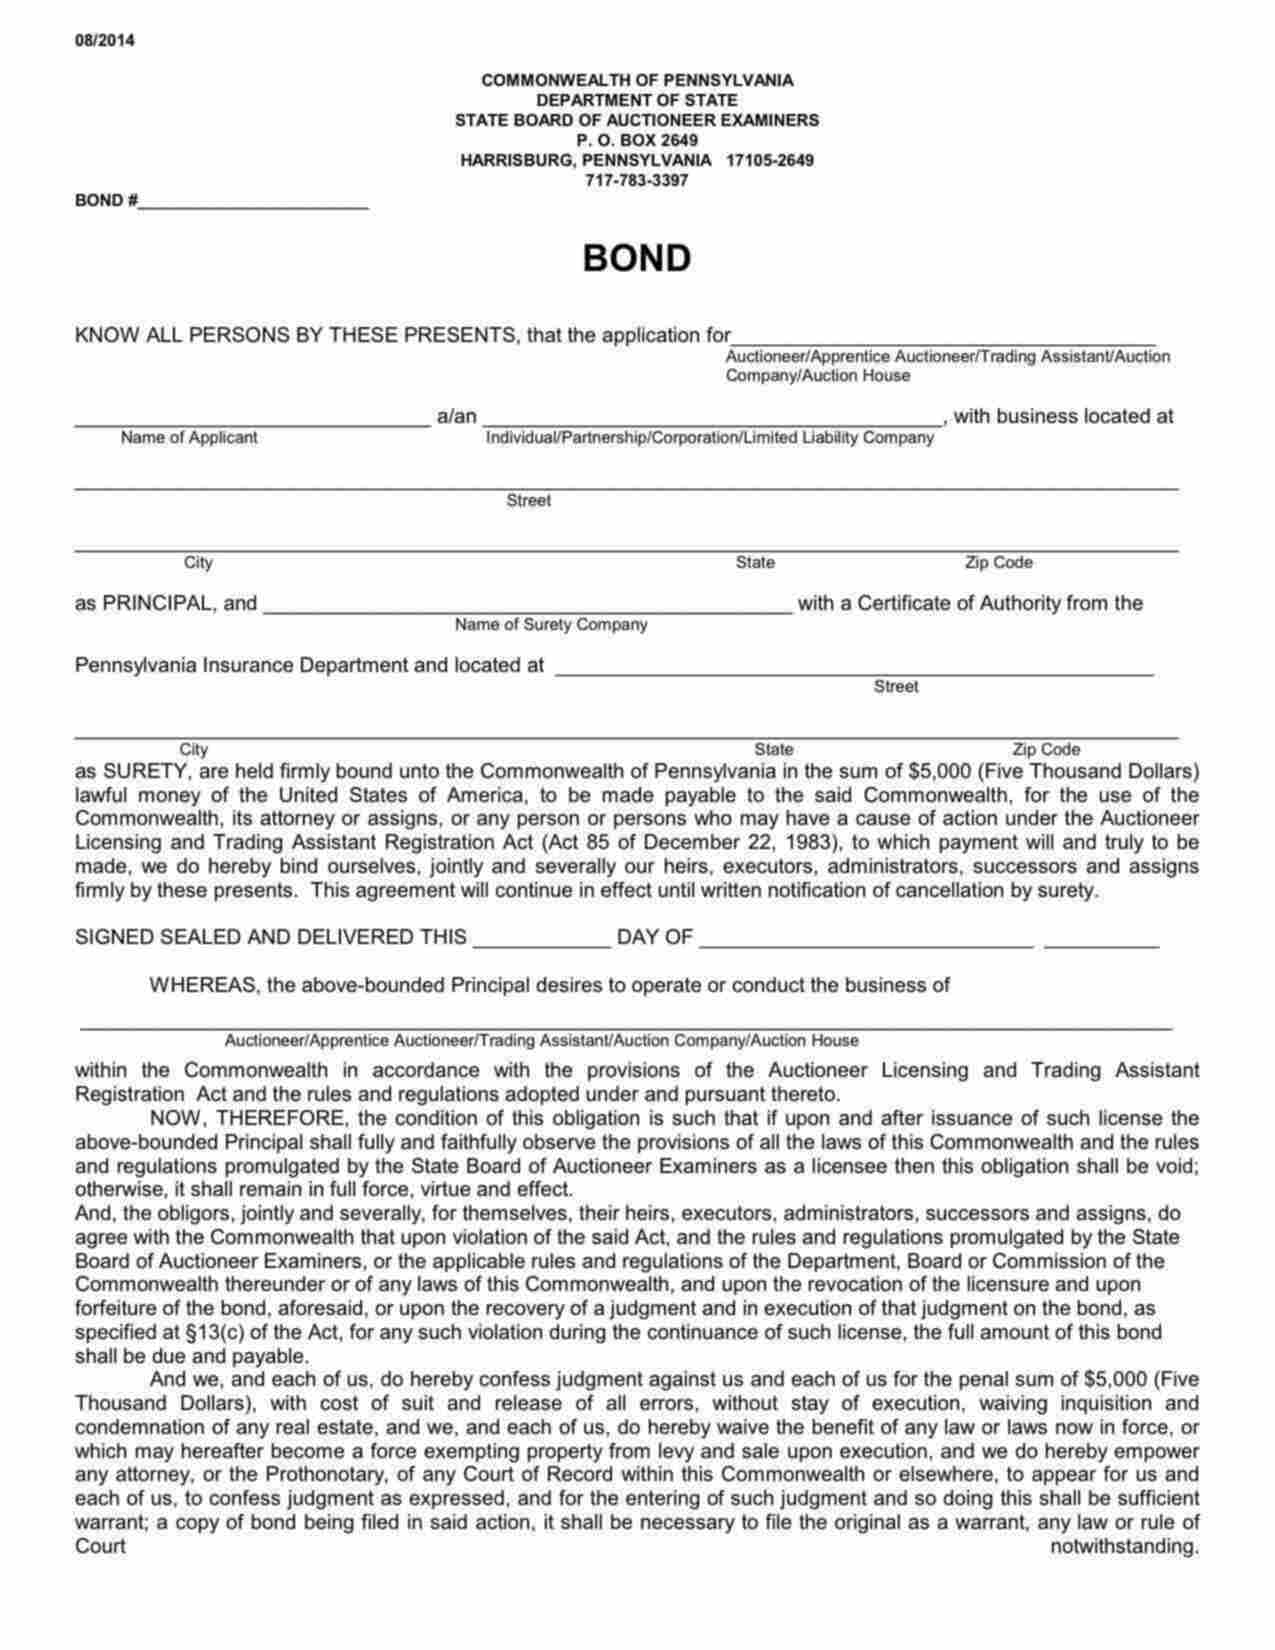 Pennsylvania Auctioneer Bond Form